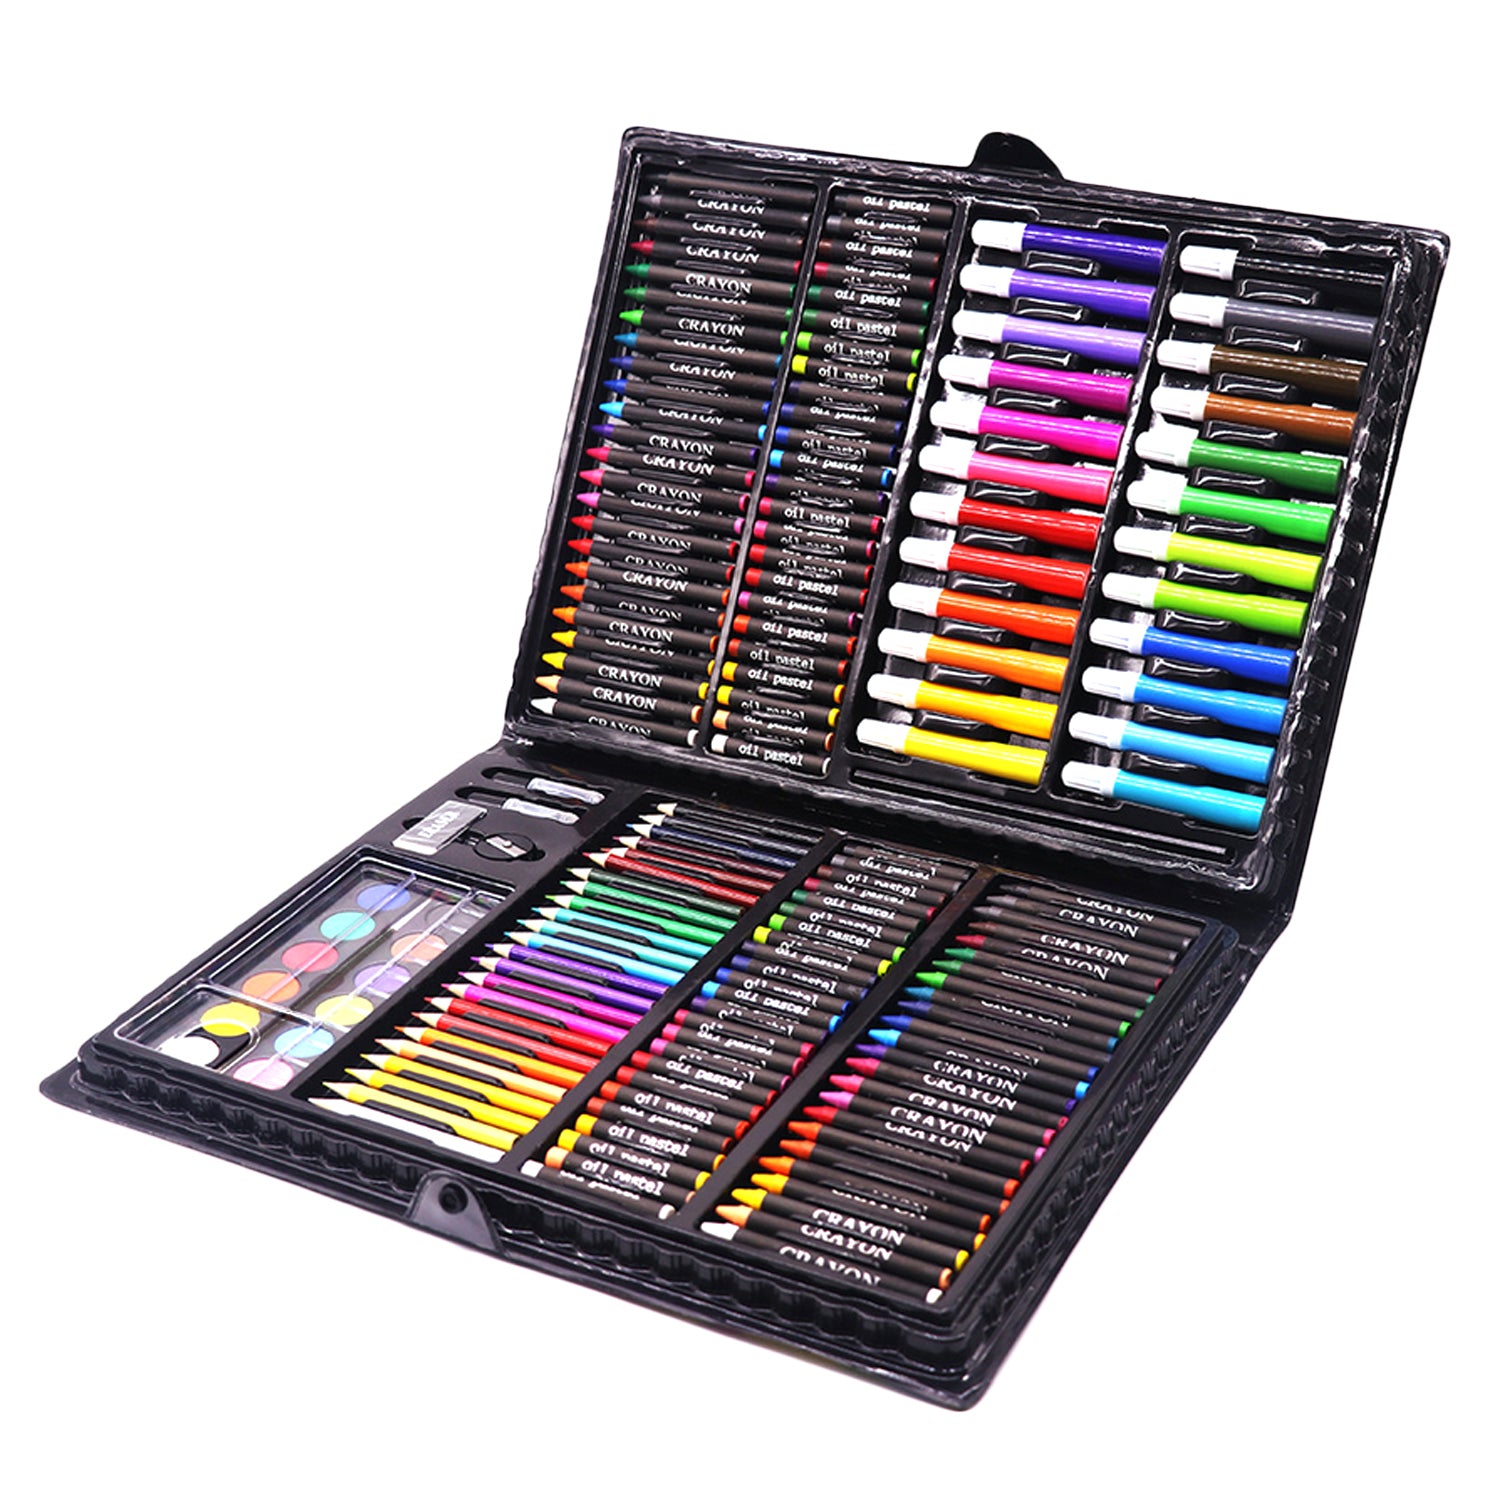 Painting Set, School Supplies, Brush Set, Oil Pastel Painting Set, Watercolor Pen Set - TryKid